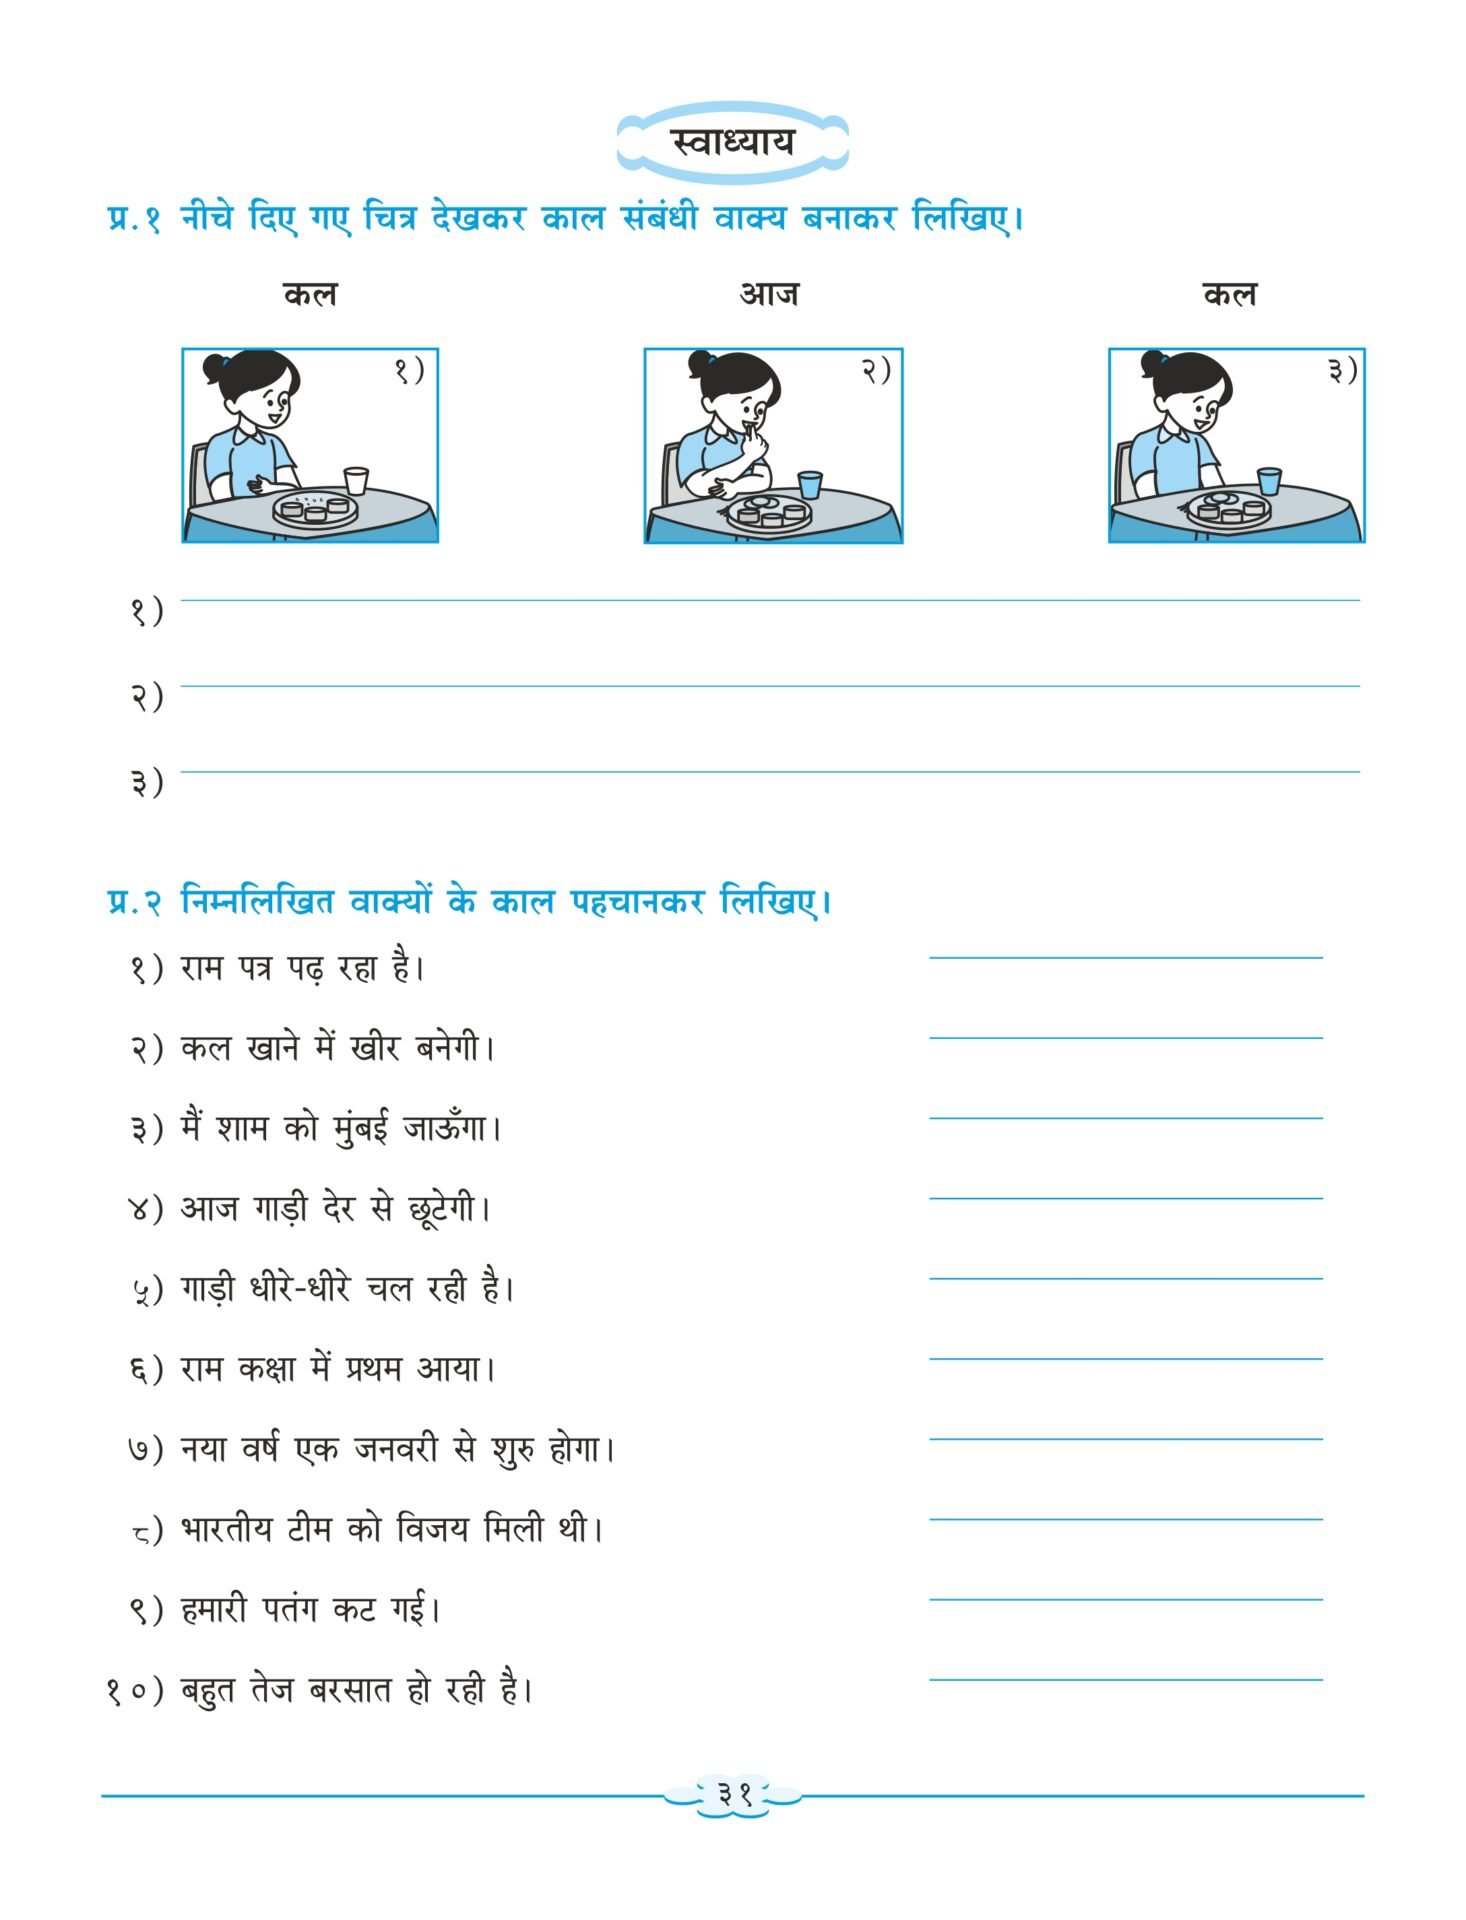 Nigam Hindi Sulabhbharati Grammar And Writing Skills Standard 6 6